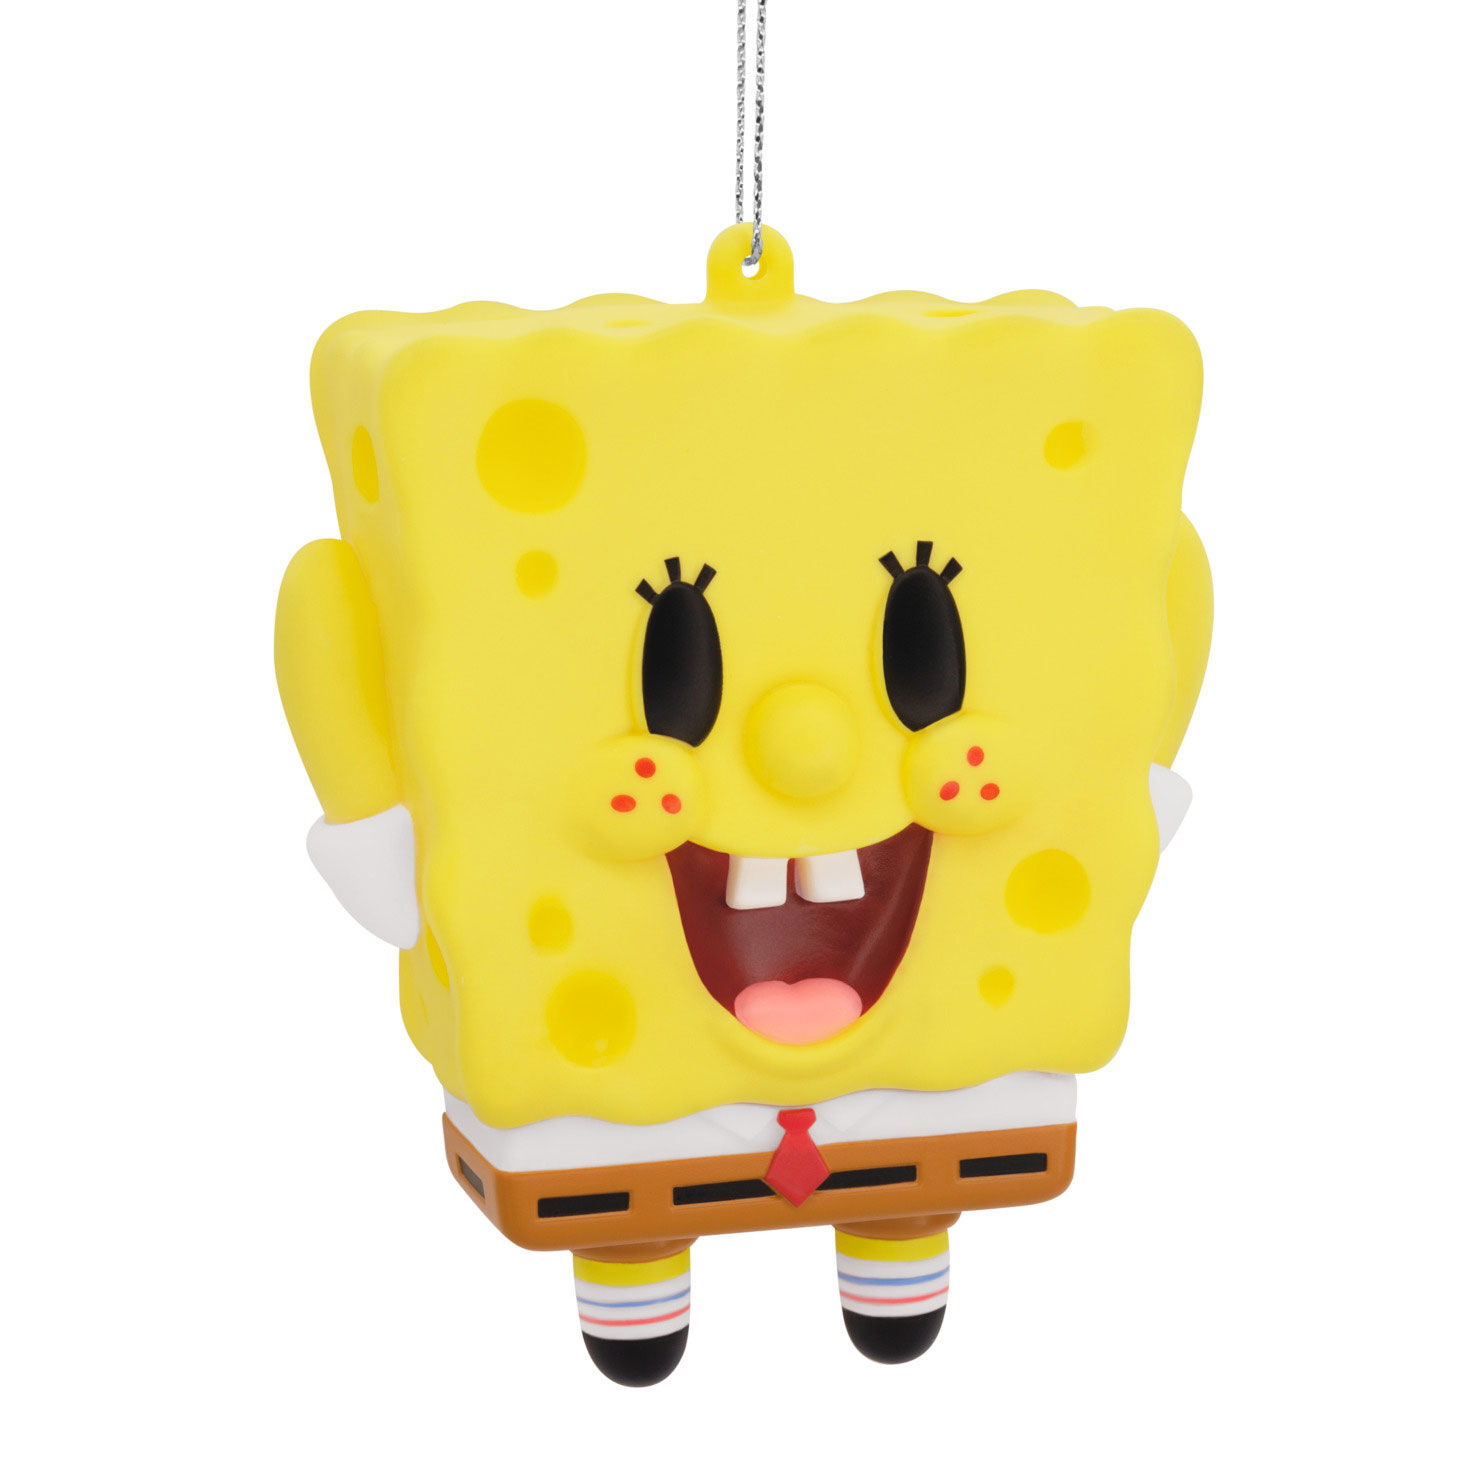 Nickelodeon SpongeBob SquarePants Shatterproof Hallmark Ornament for only USD 6.99 | Hallmark